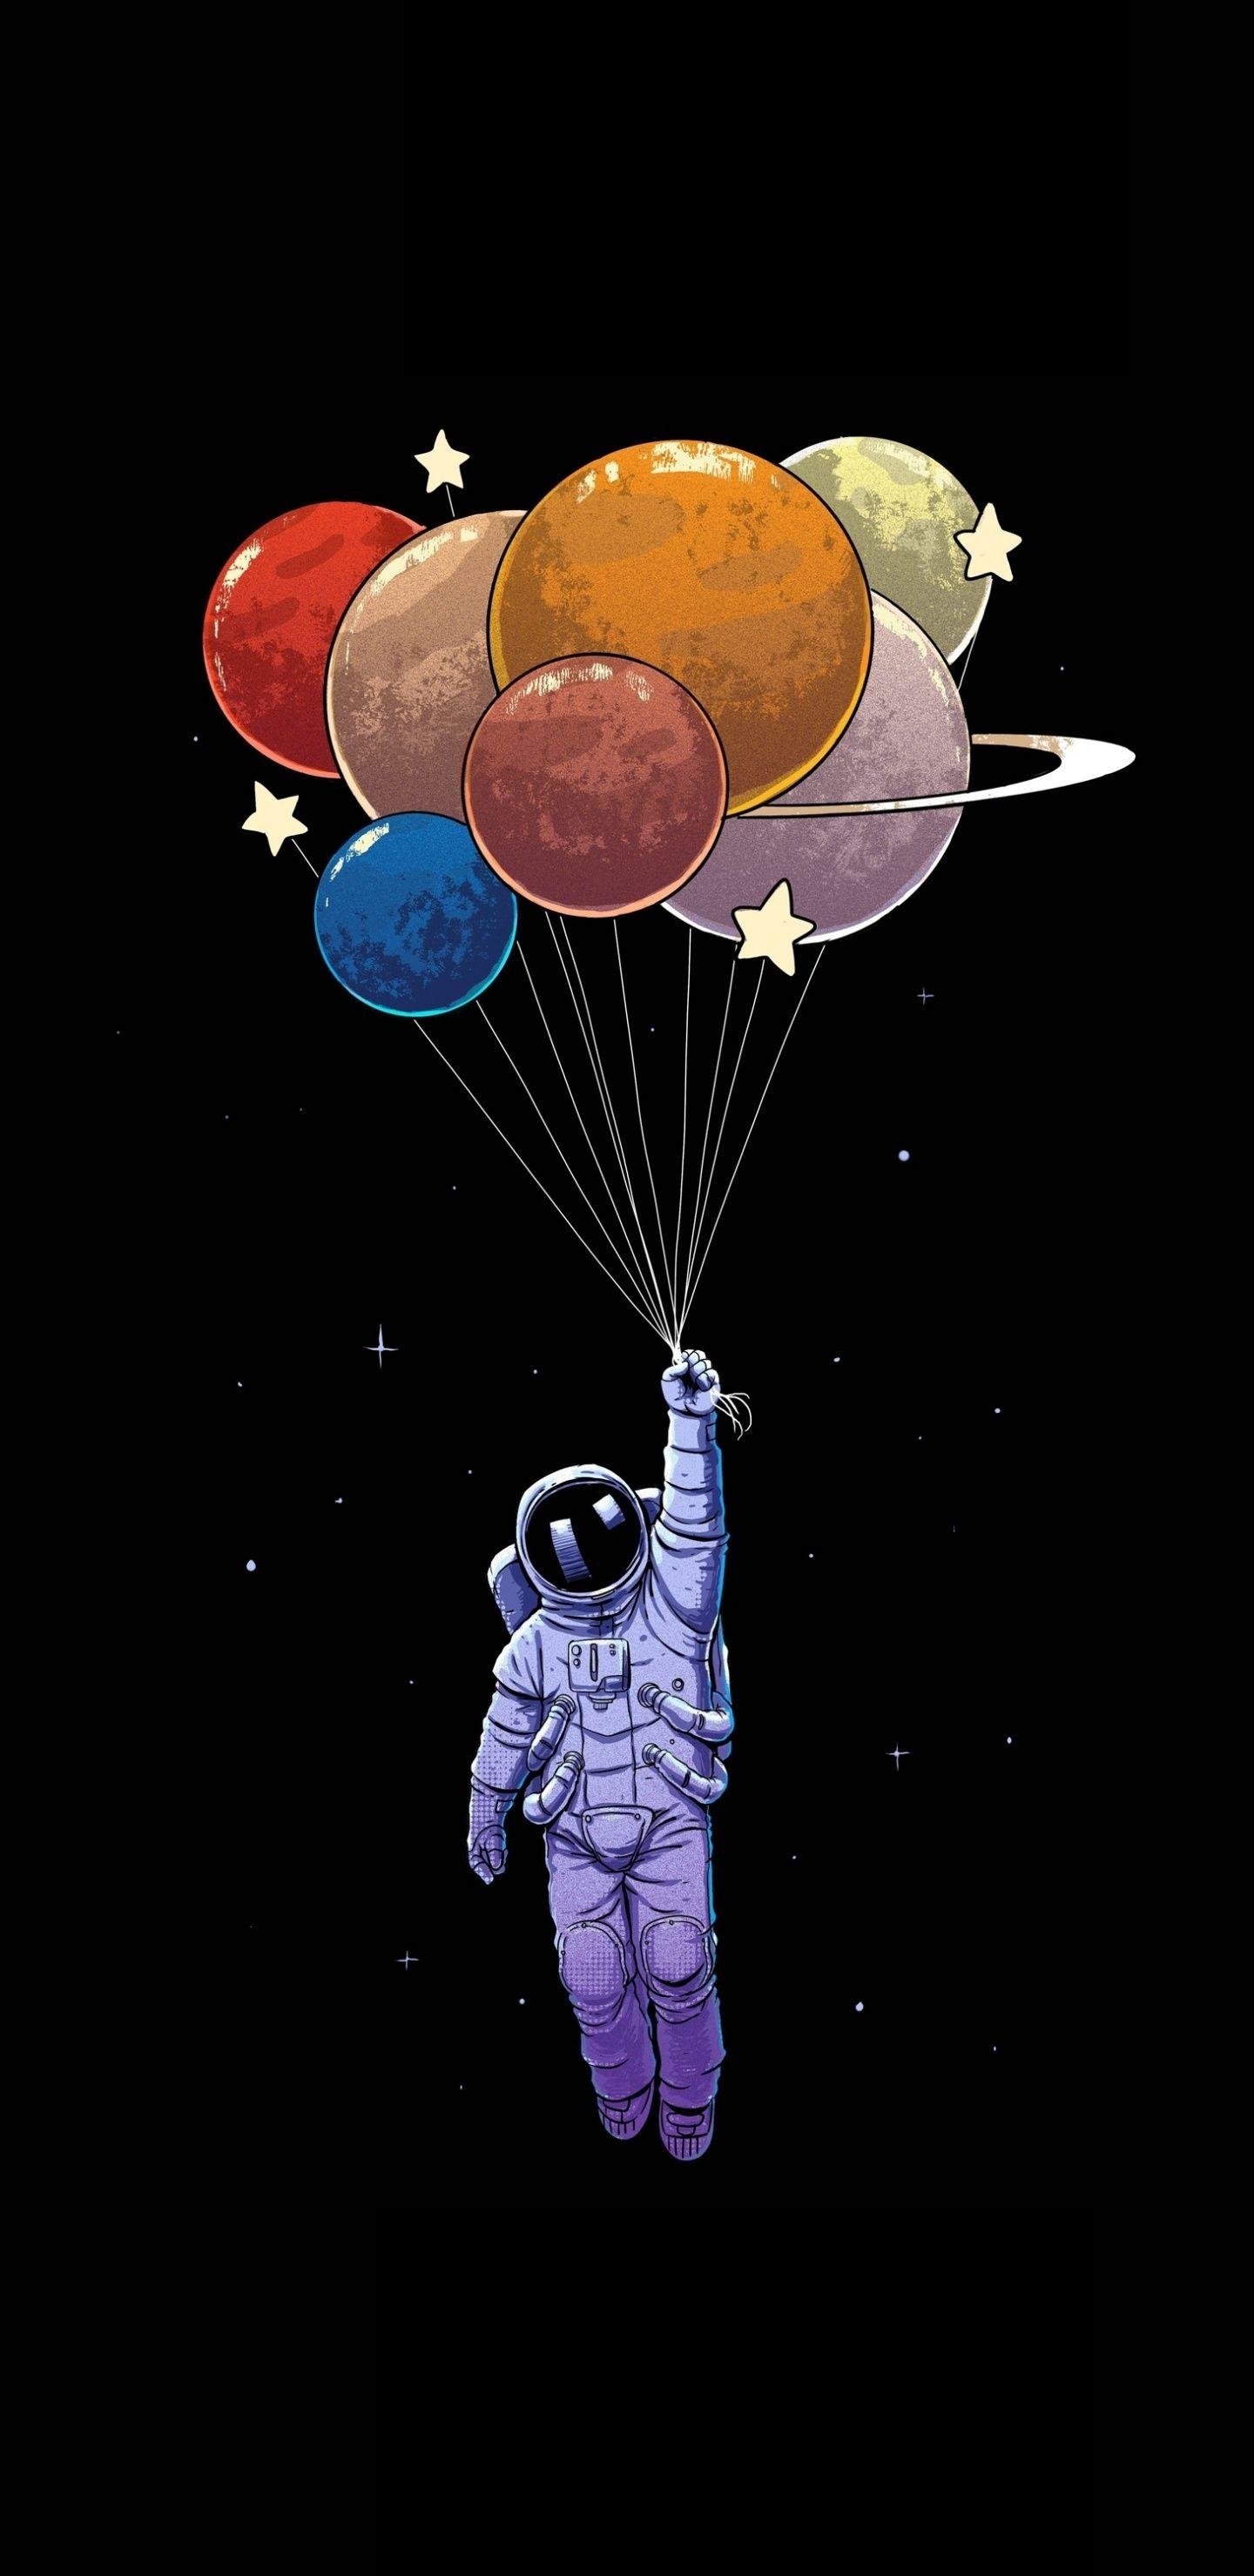 Download 1440x2960 wallpaper Astronaut exploration flight